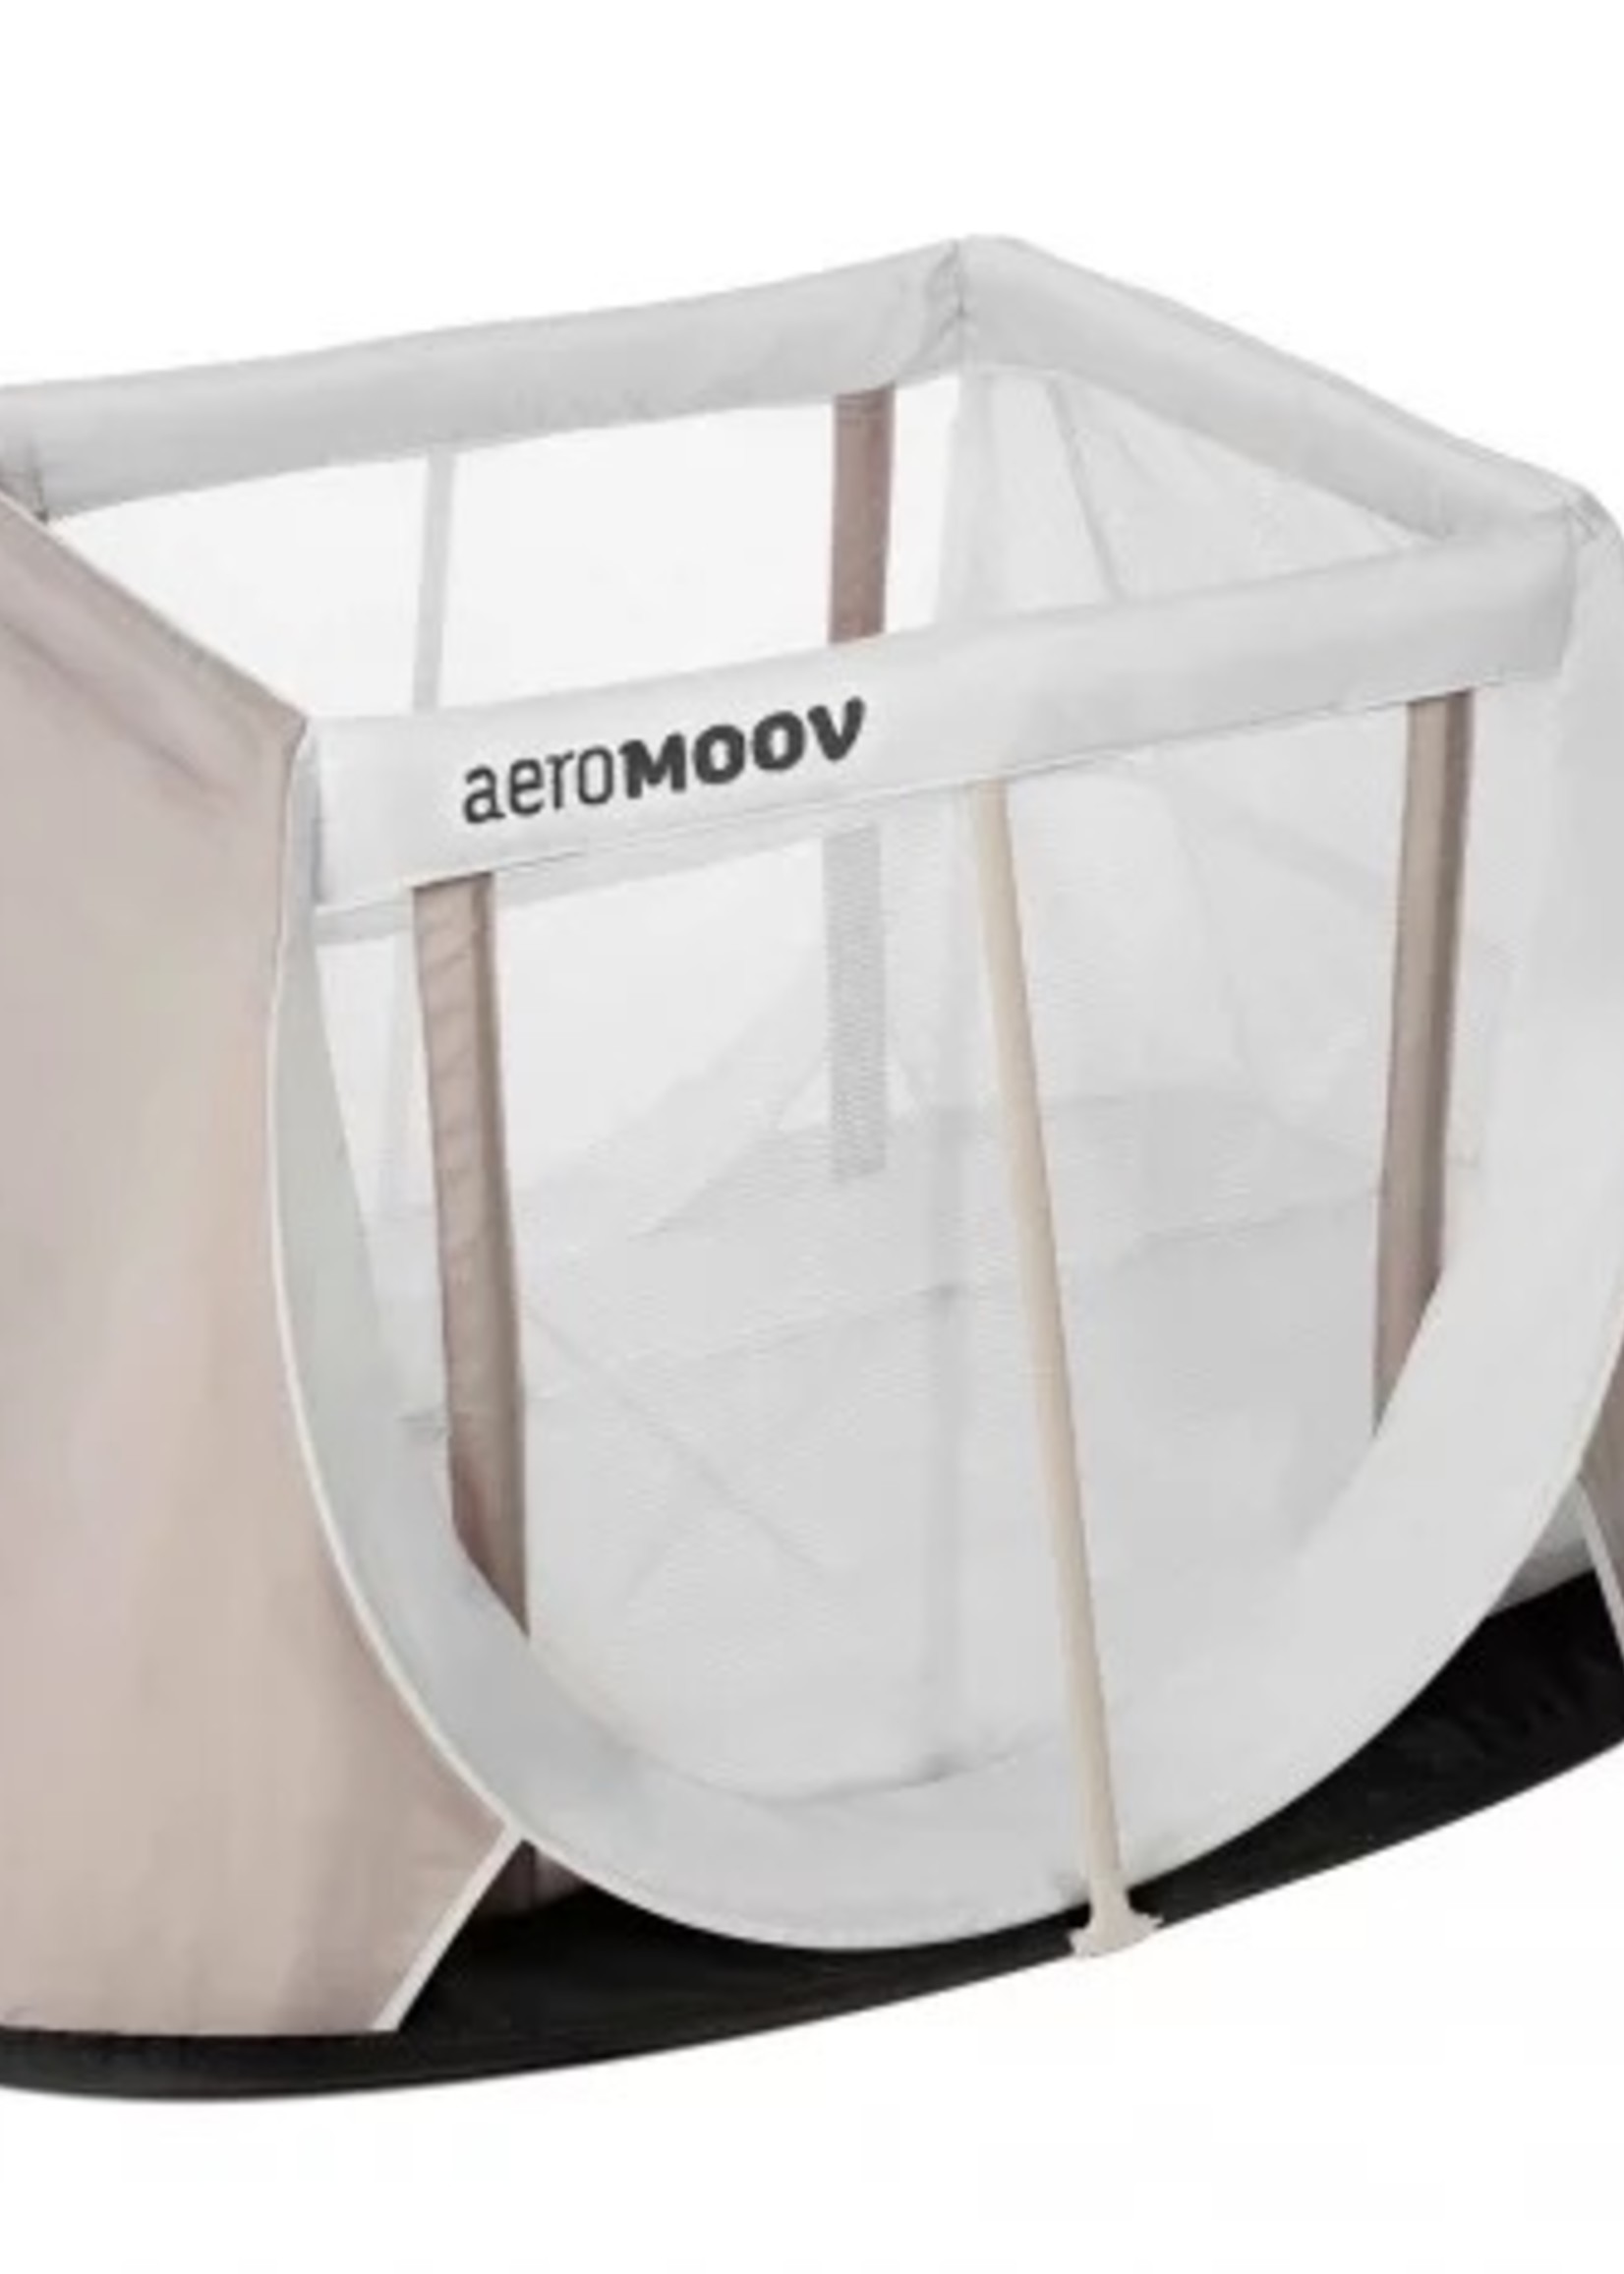 AeroMoov Instant Travel Cot Reisbed - White Sand